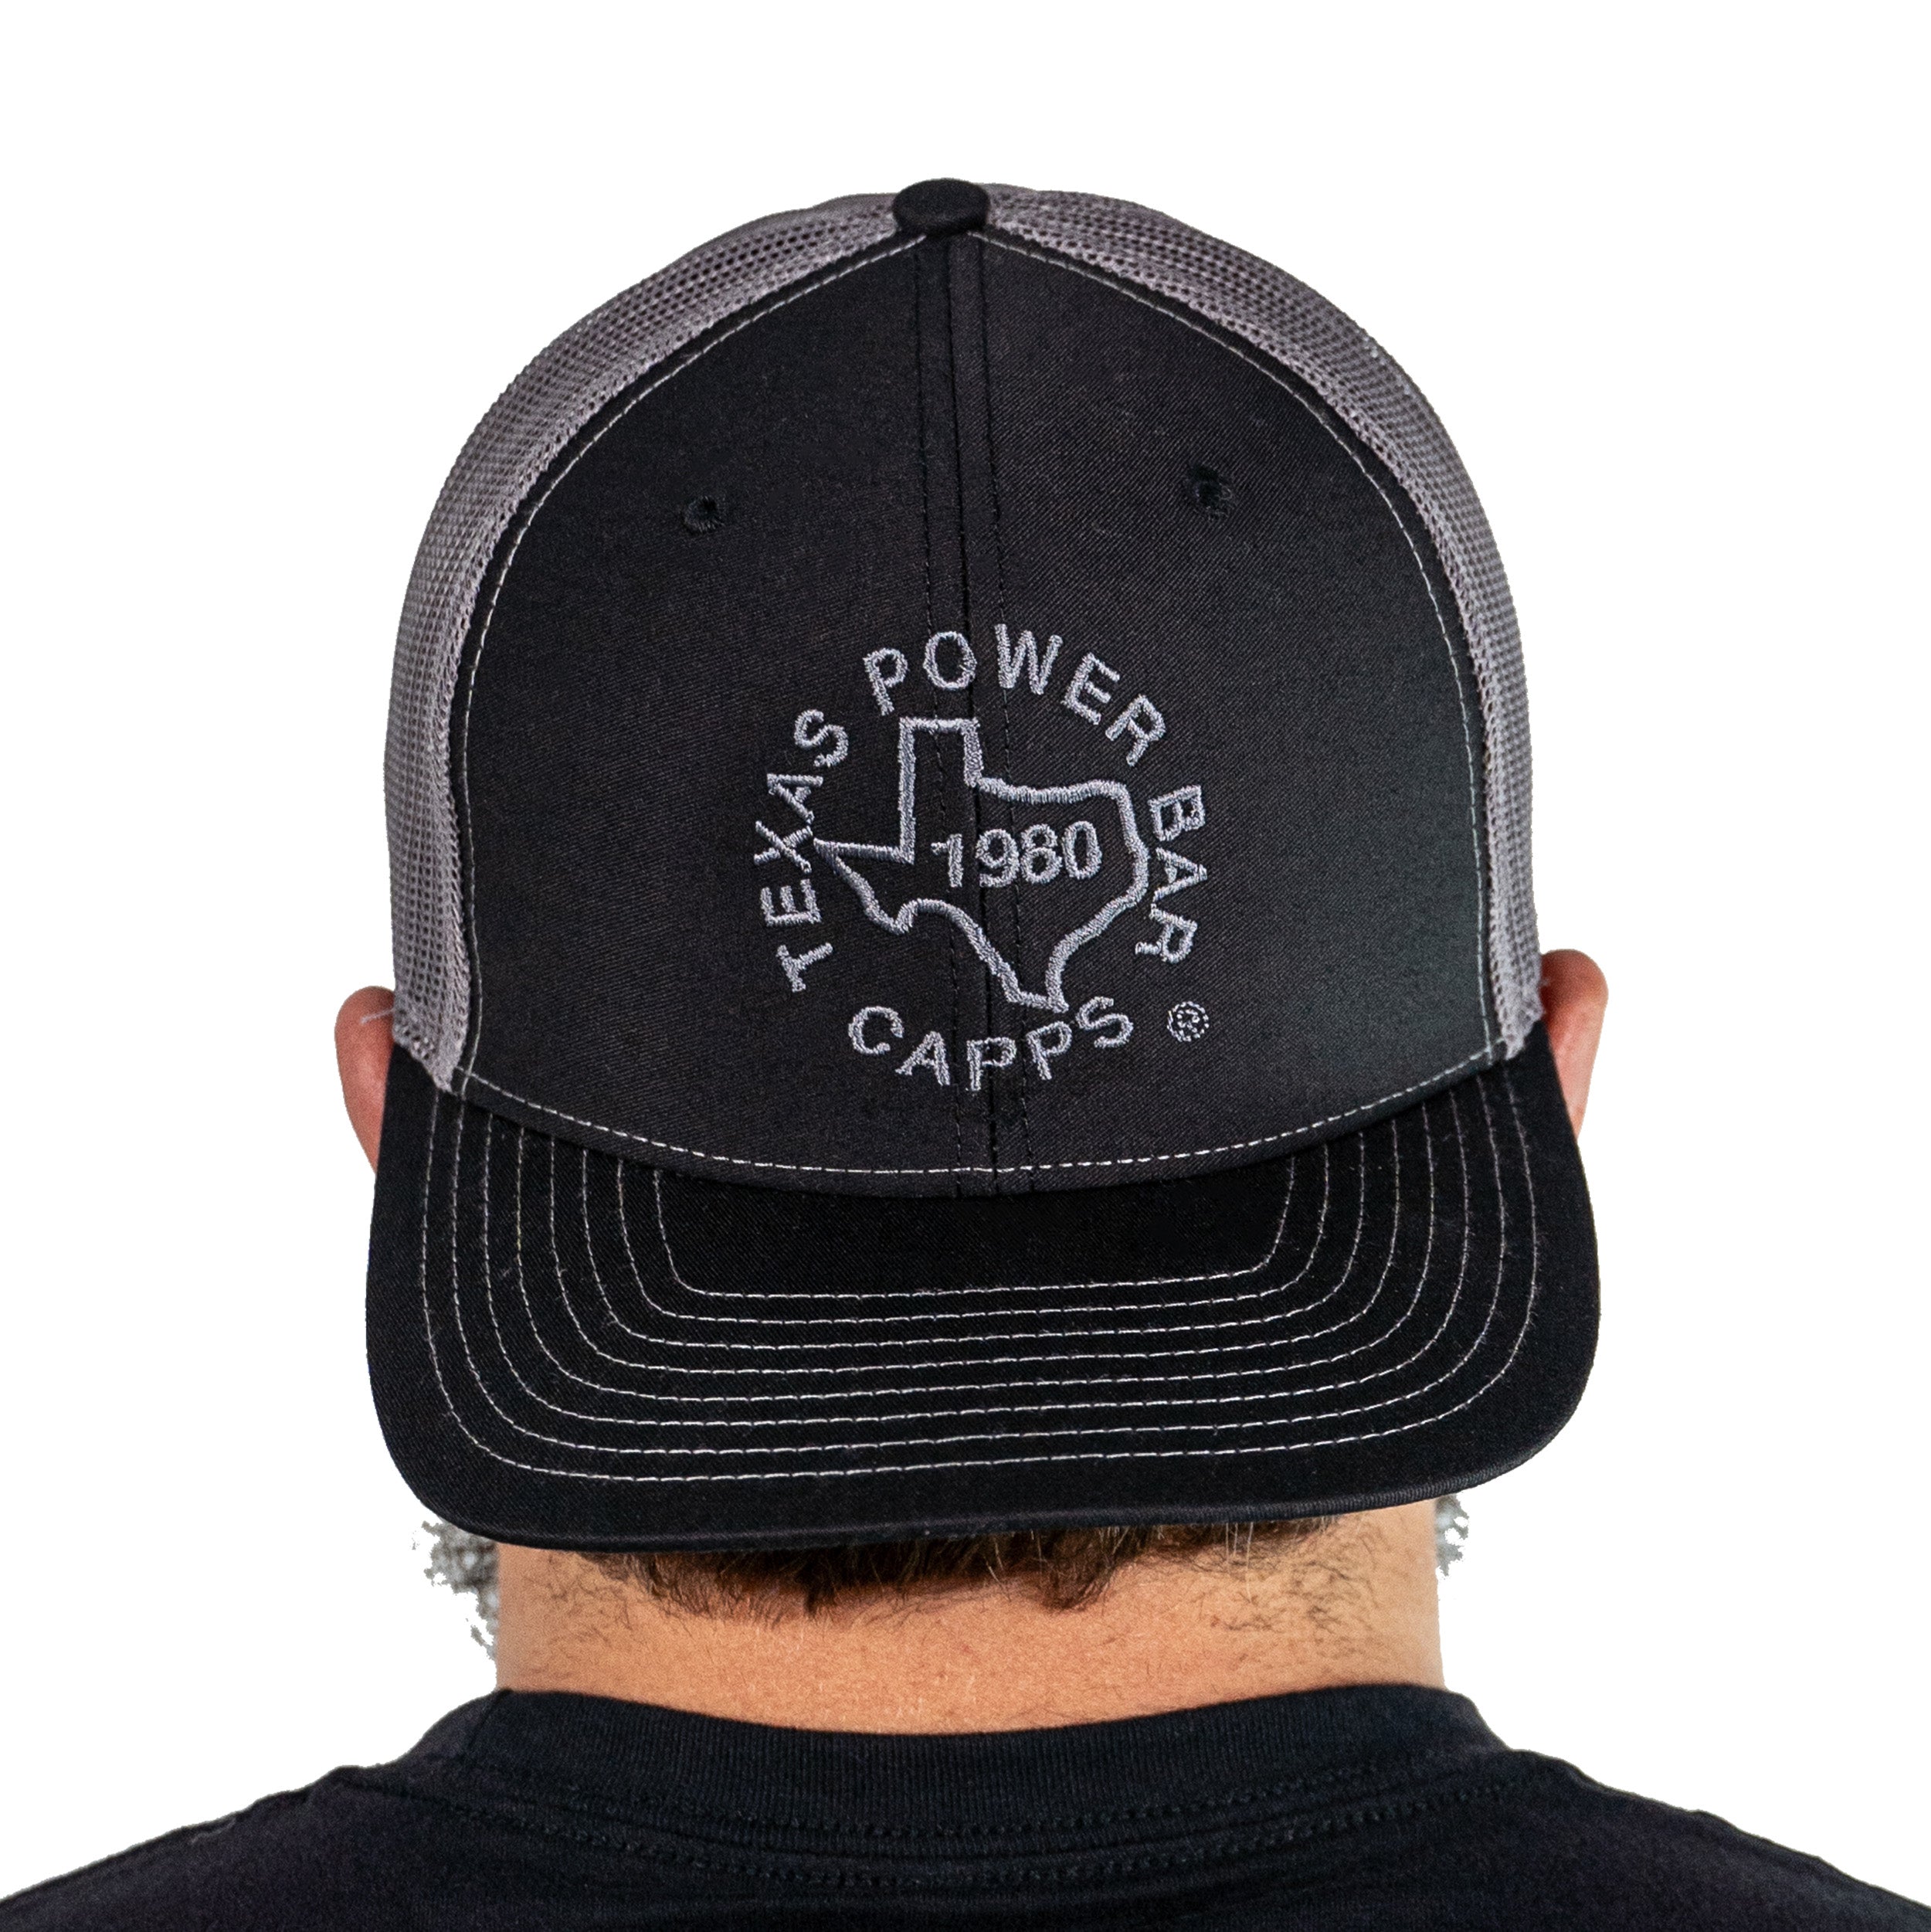 The "Original" Trucker Hat